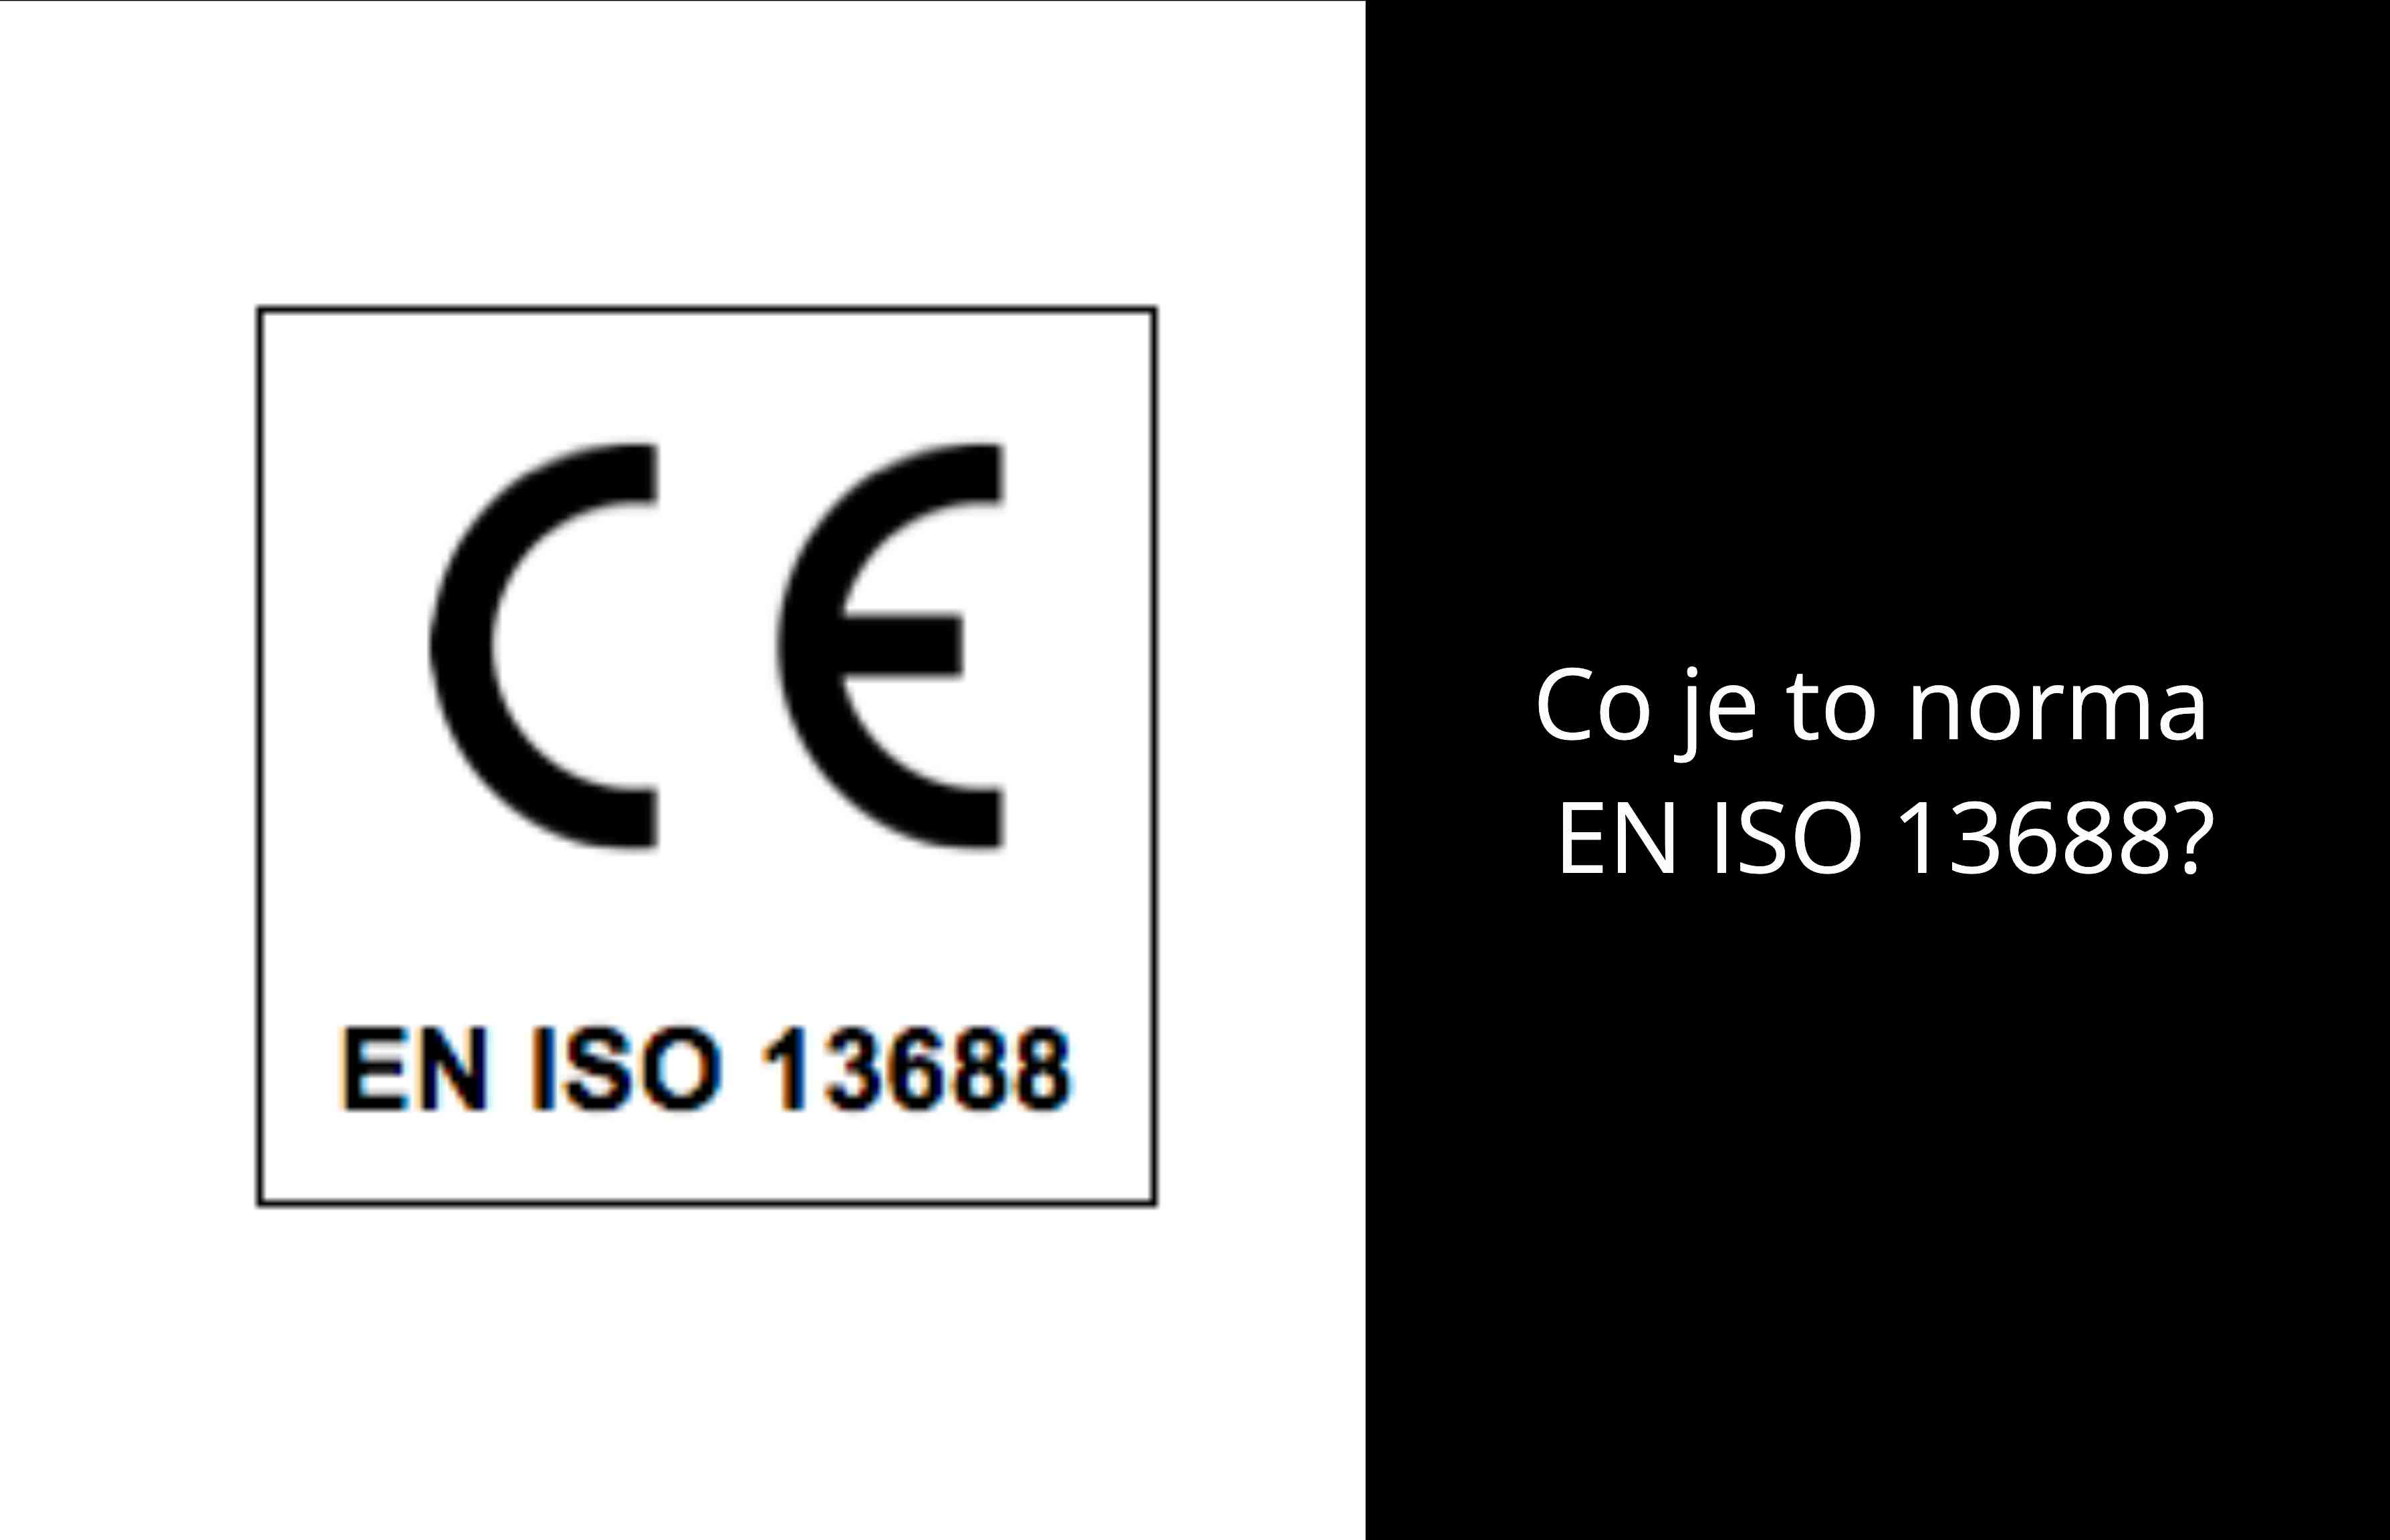 Co je to norma EN ISO 13688?